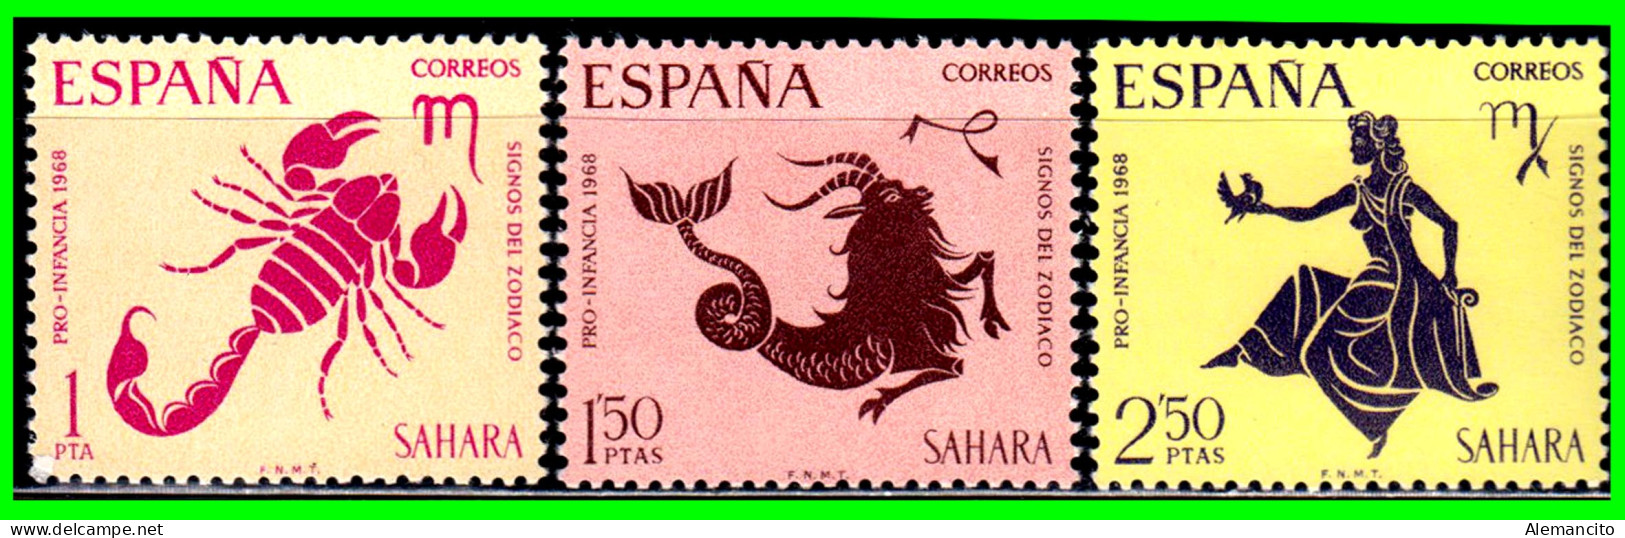 ESPAÑA COLONIAS ESPAÑOLAS ( SAHARA ESPAÑOL AFRICA ) SERIE DE SELLOS AÑO 1968 - SIGNOS DEL ZODIACO - NUEVOS - - Sahara Español